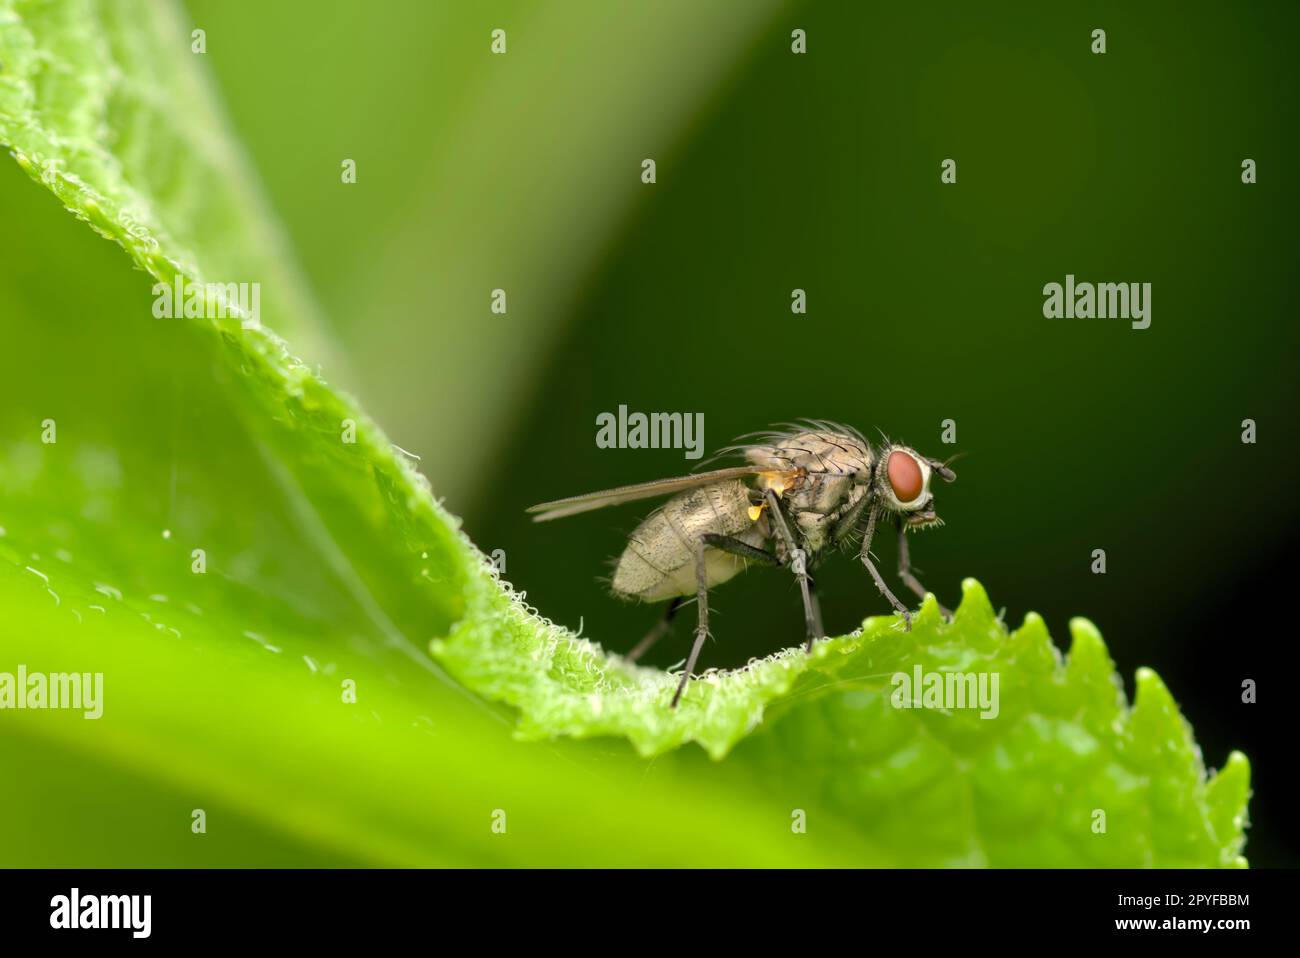 Single fly (genus Helina) sitting on a leaf, macro photography, insects, biodiversity, nature Stock Photo